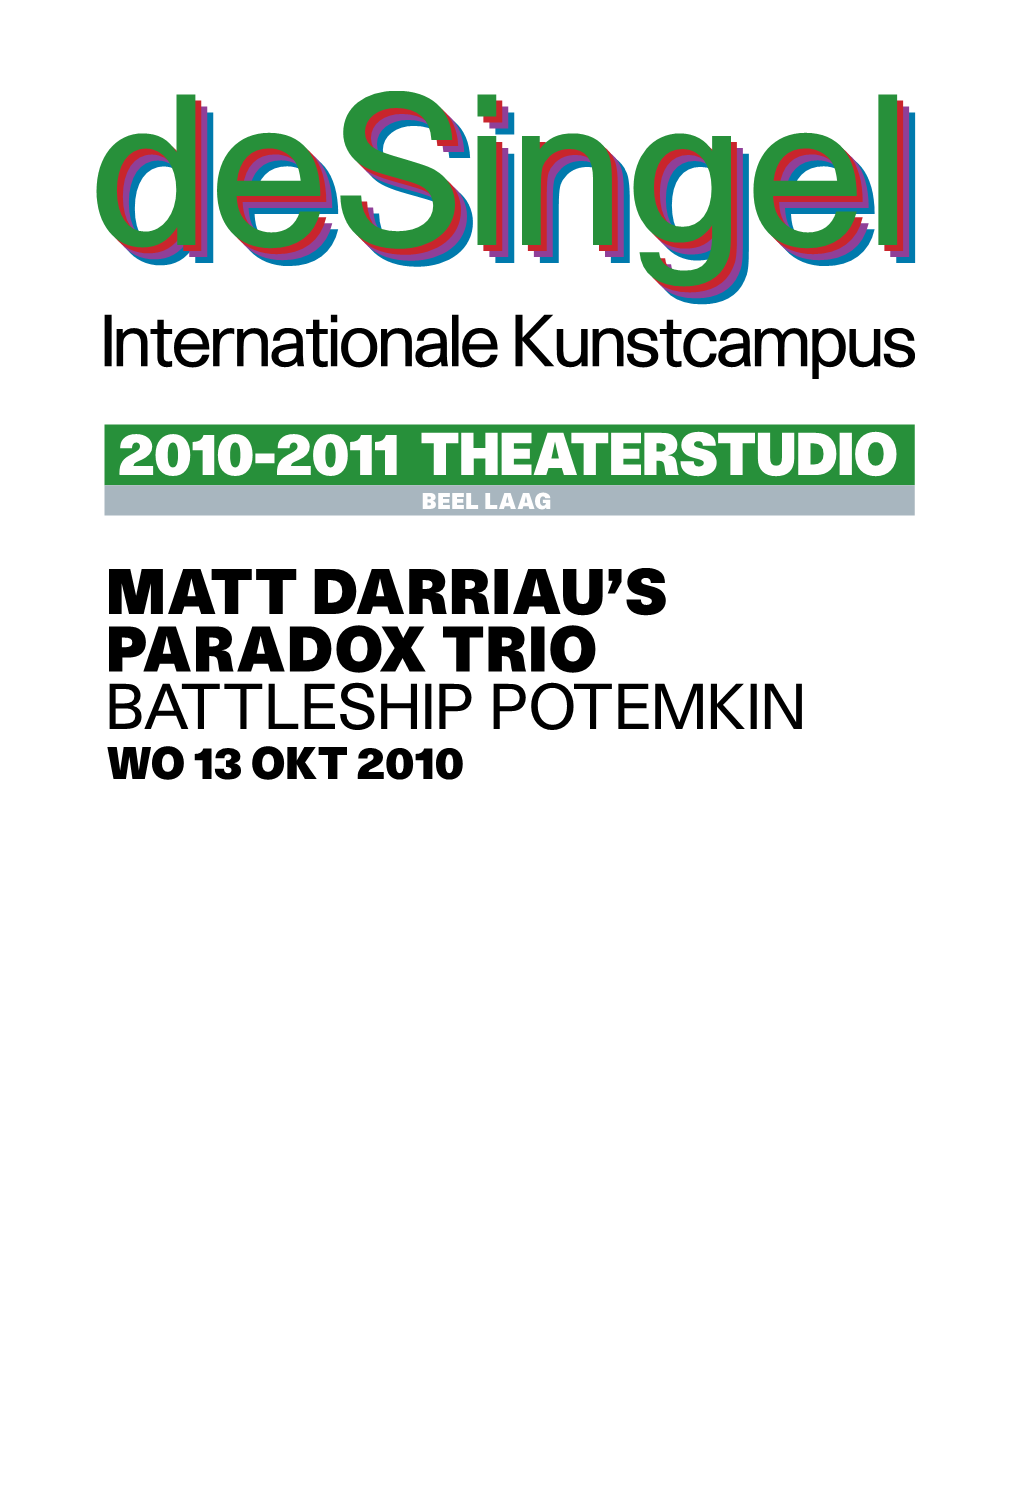 Matt Darriau's Paradox Trio Battleship Potemkin